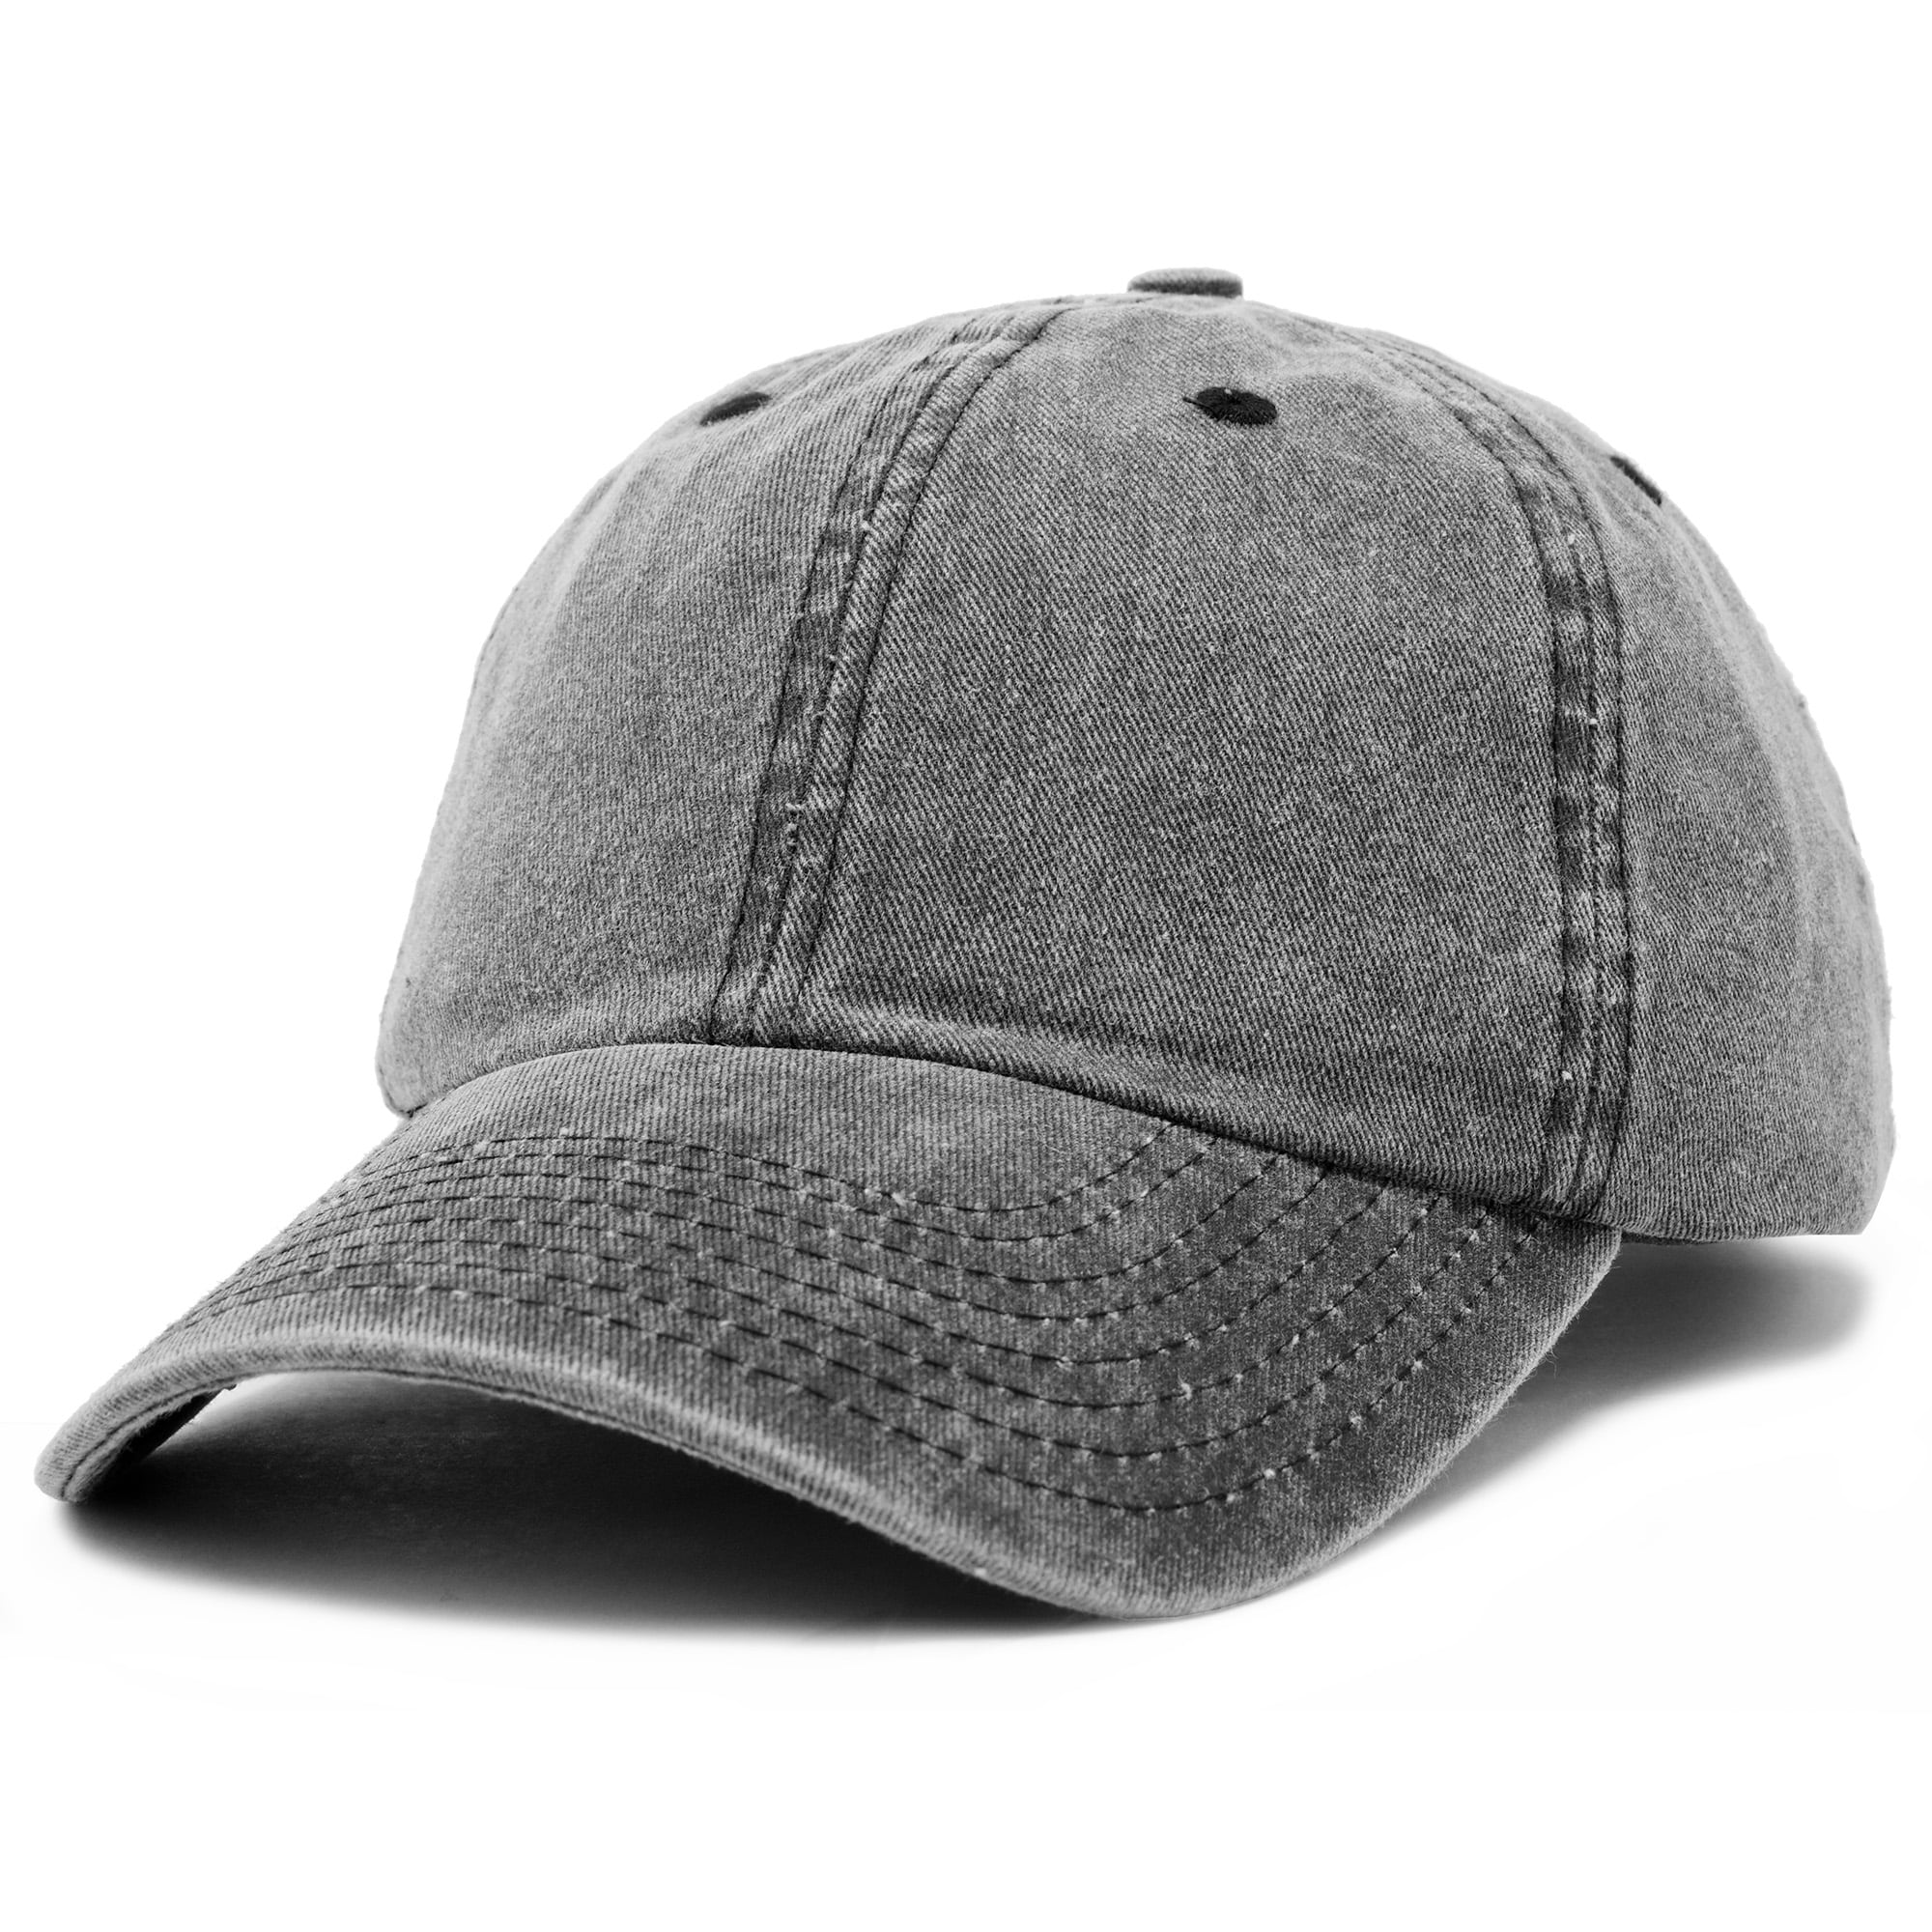 D C.Supernice Unisex Adult Vintage Baseball Cap Mens Womens Adjustable Cotton Breathable Do Old Hat Hip Hop Snapback Hats 